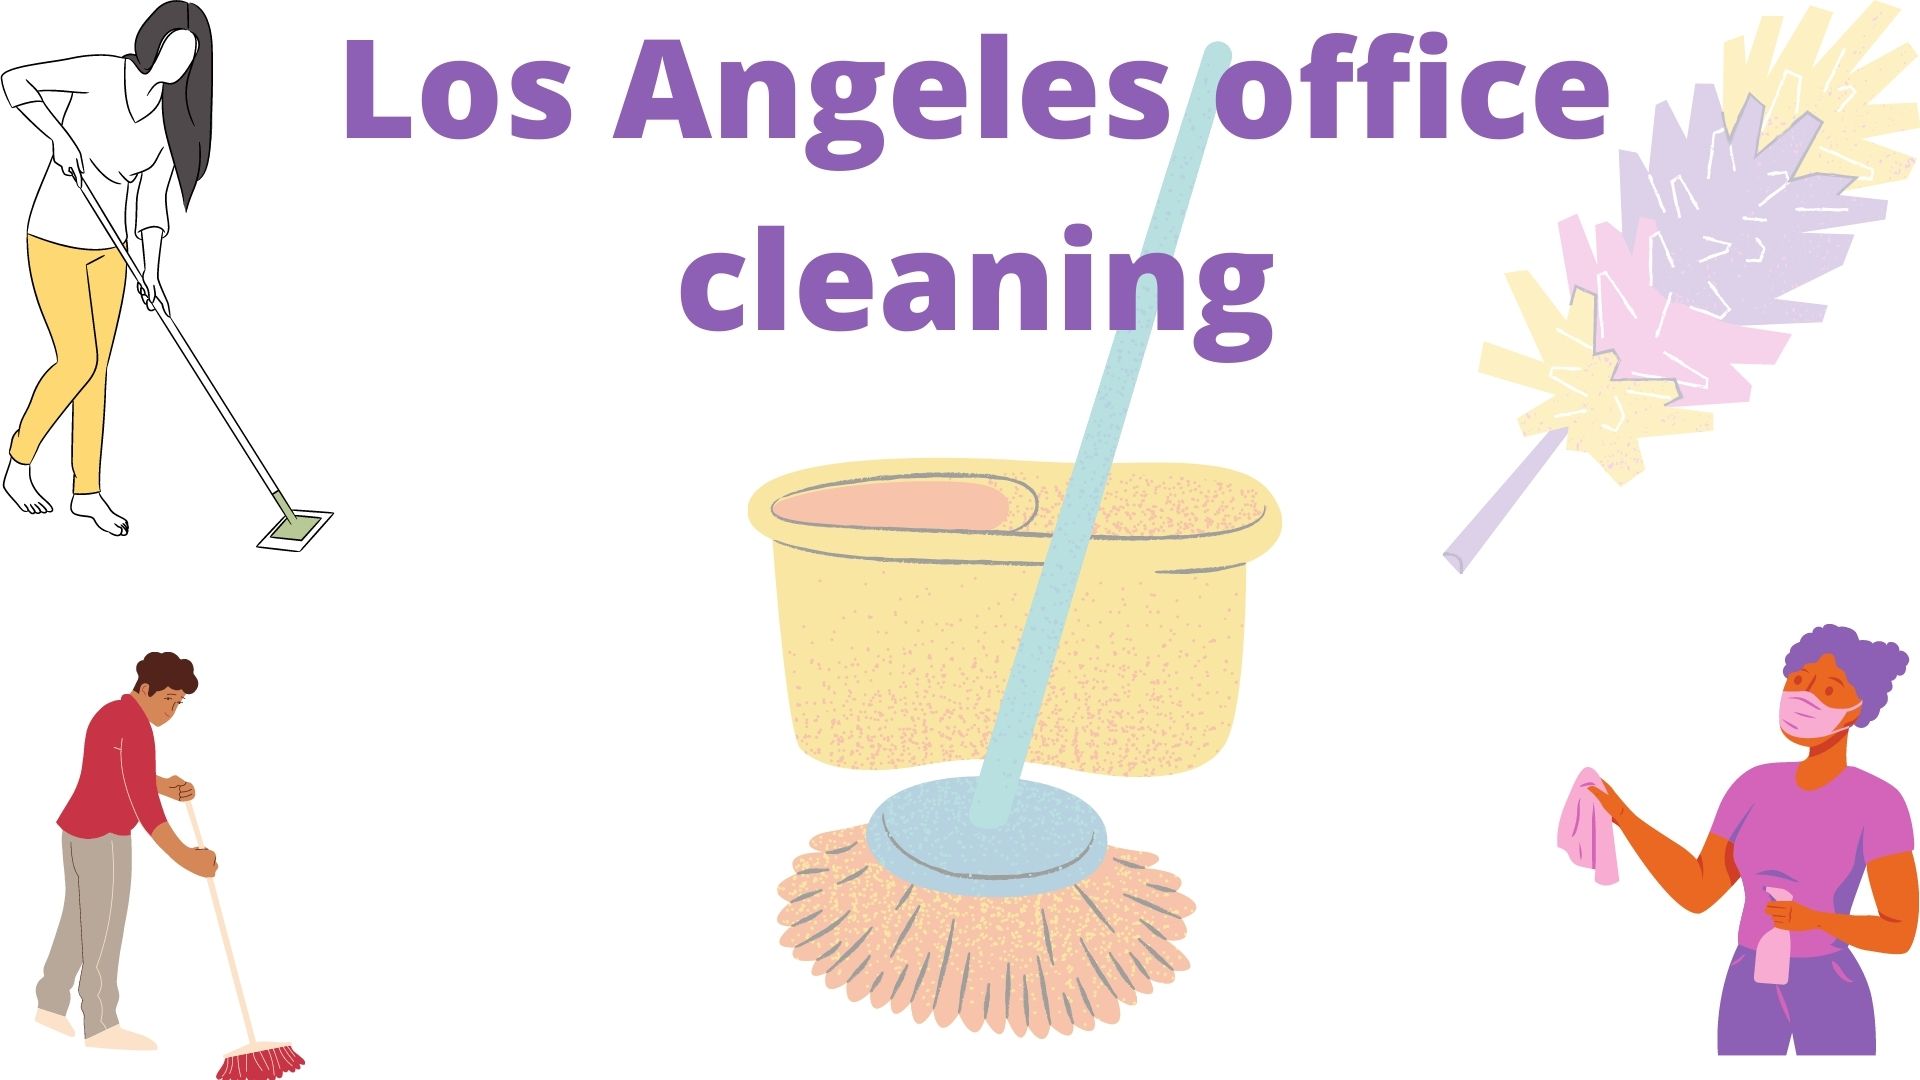 public/uploads/2021/09/Los-Angeles-office-cleaning.jpg